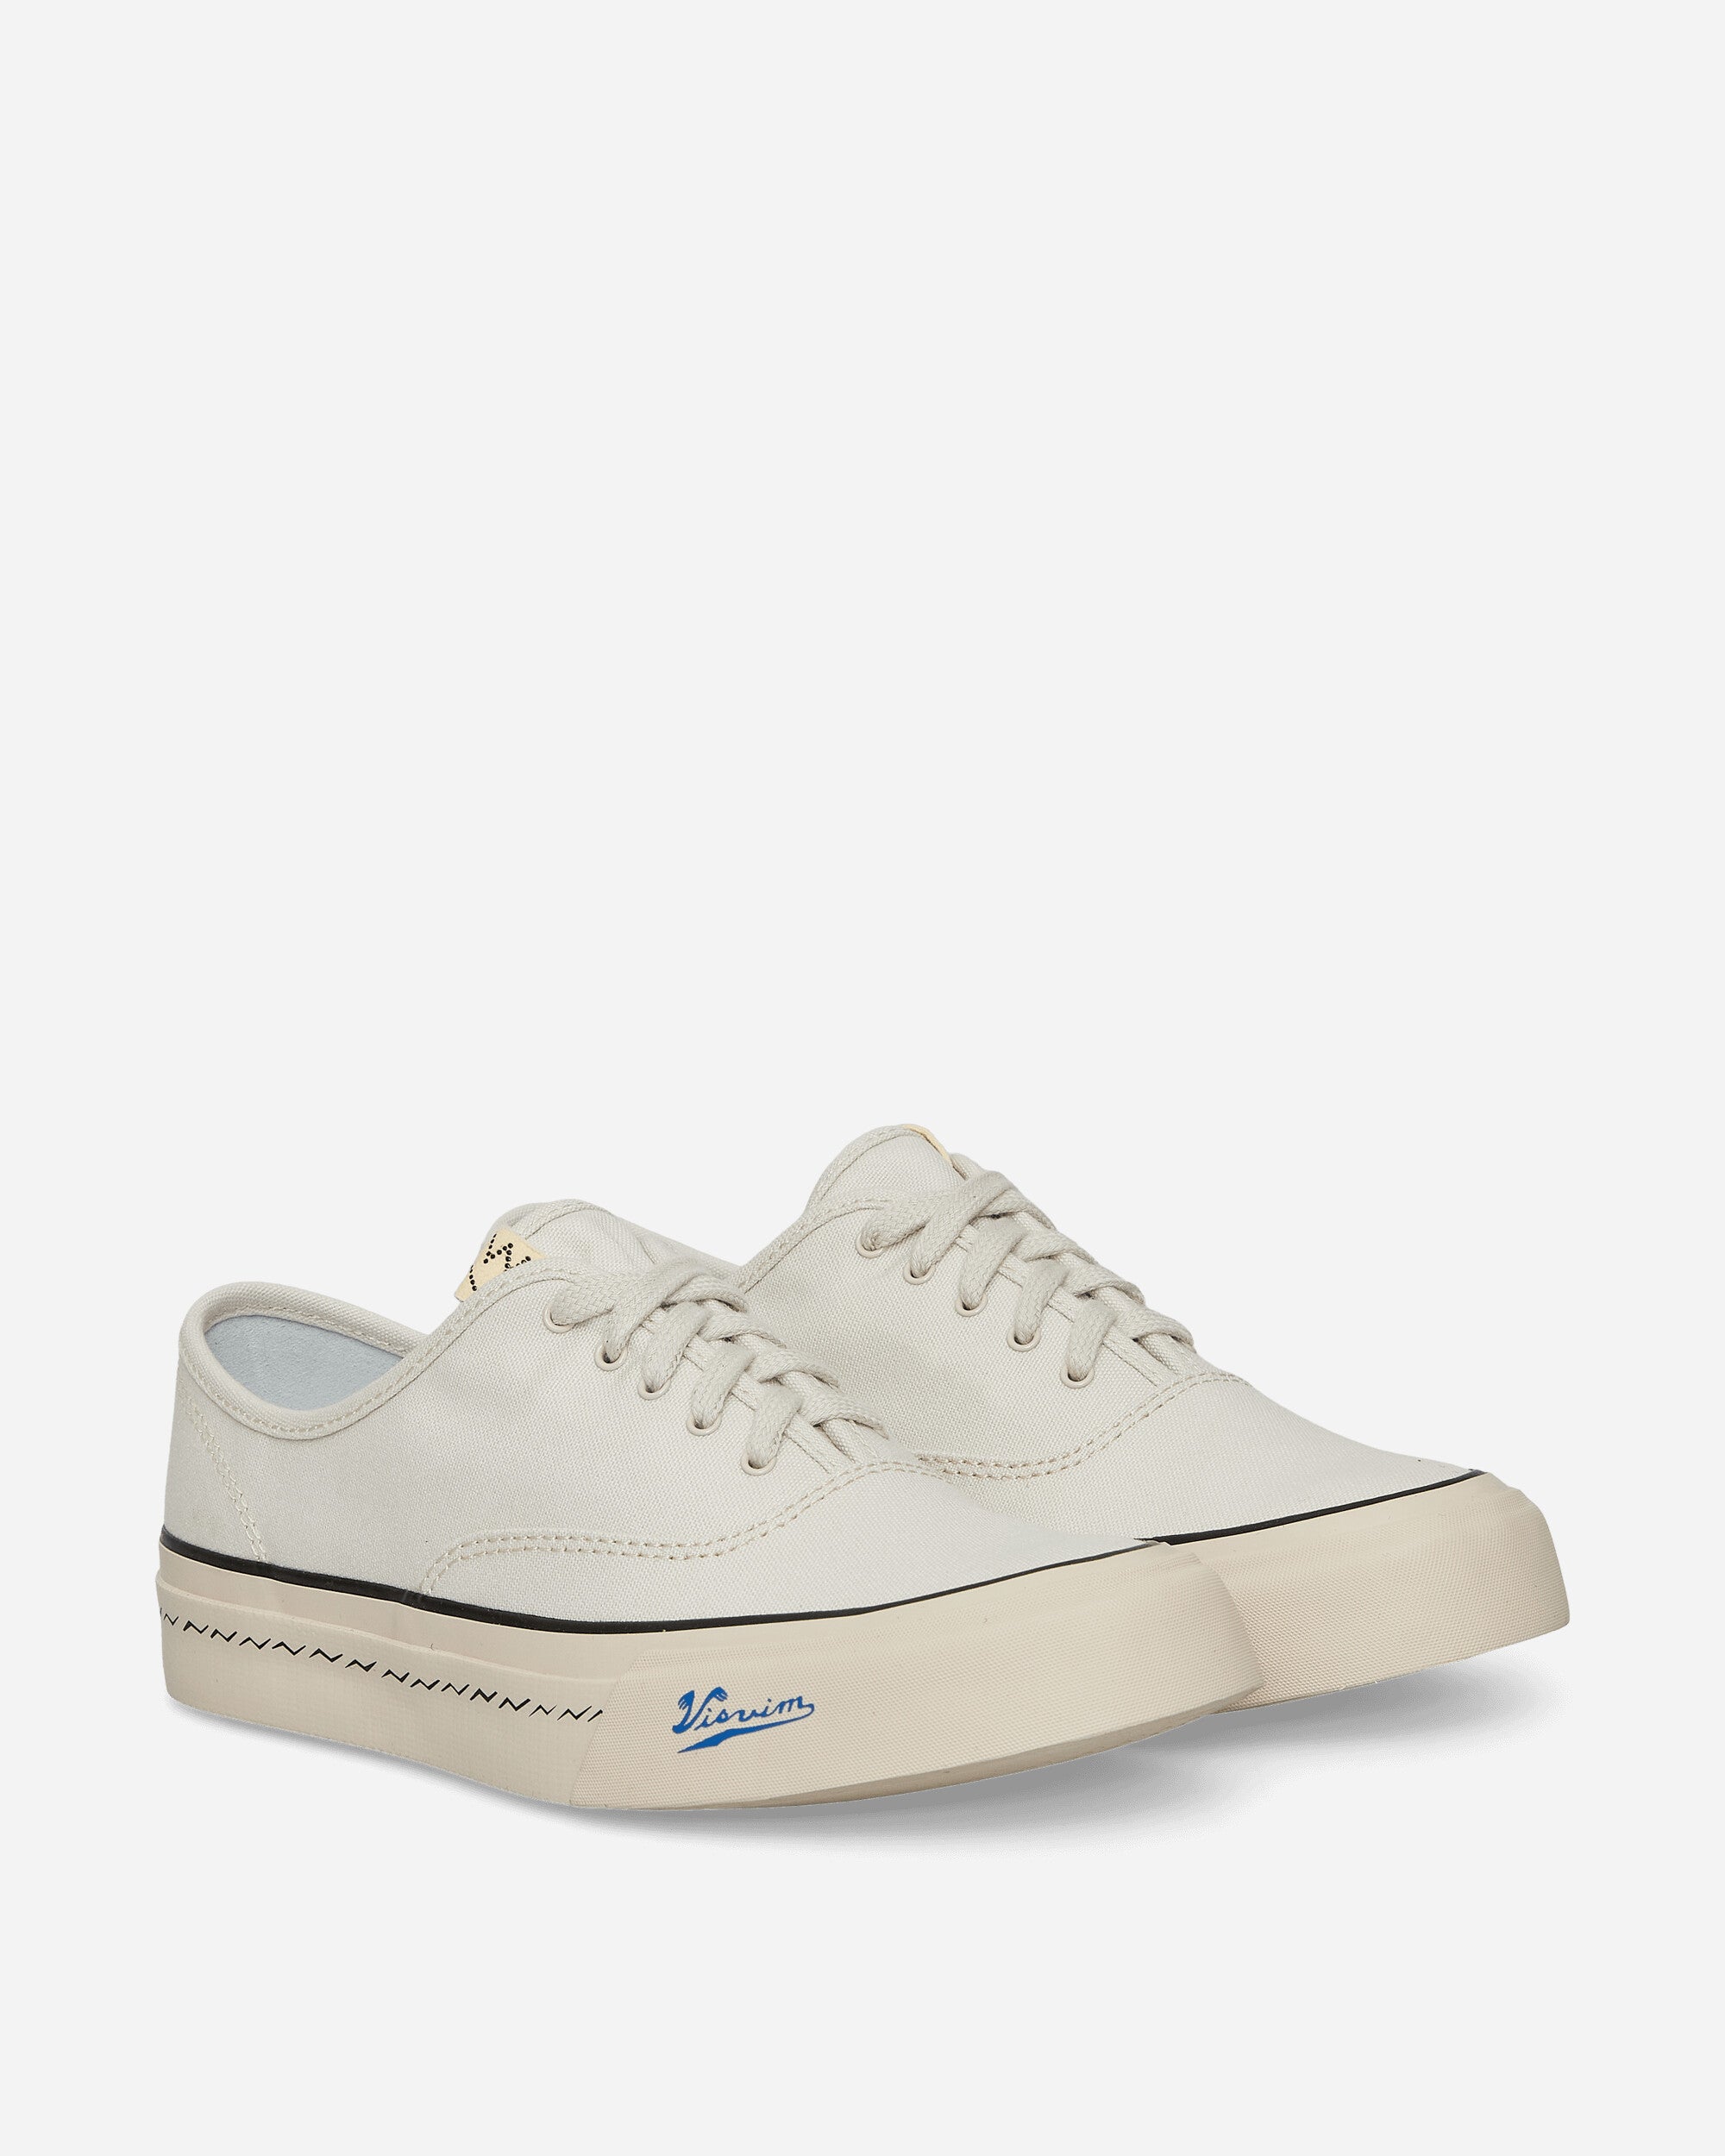 Logan Deck Lo Sipe Sneakers White